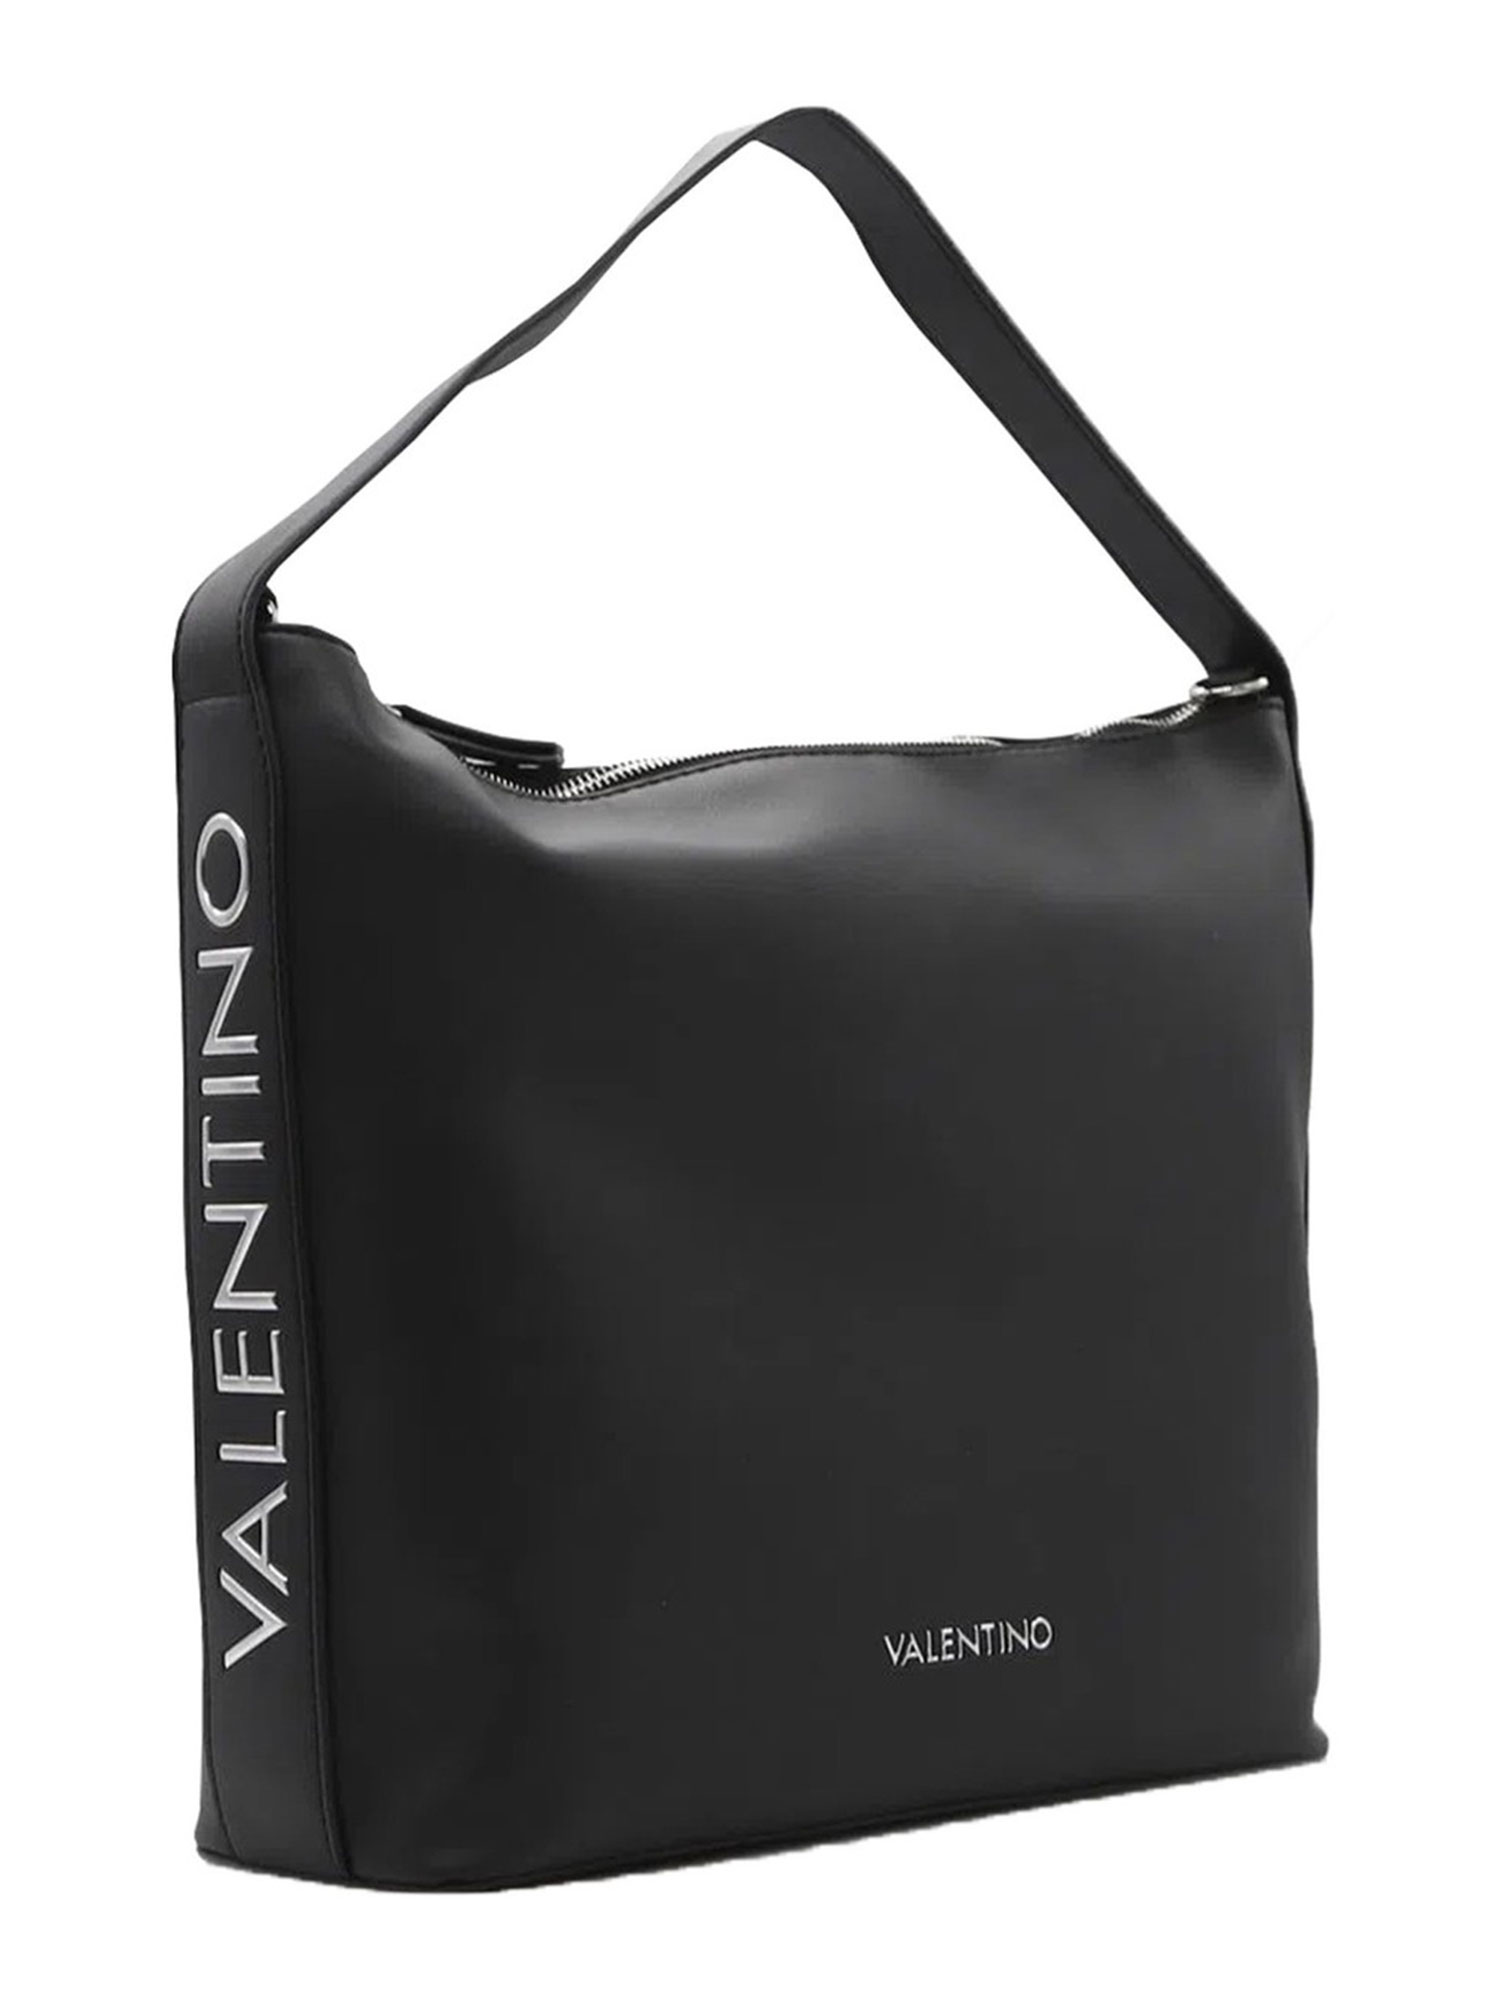 VALENTINO BAGS OLIVE - NERO